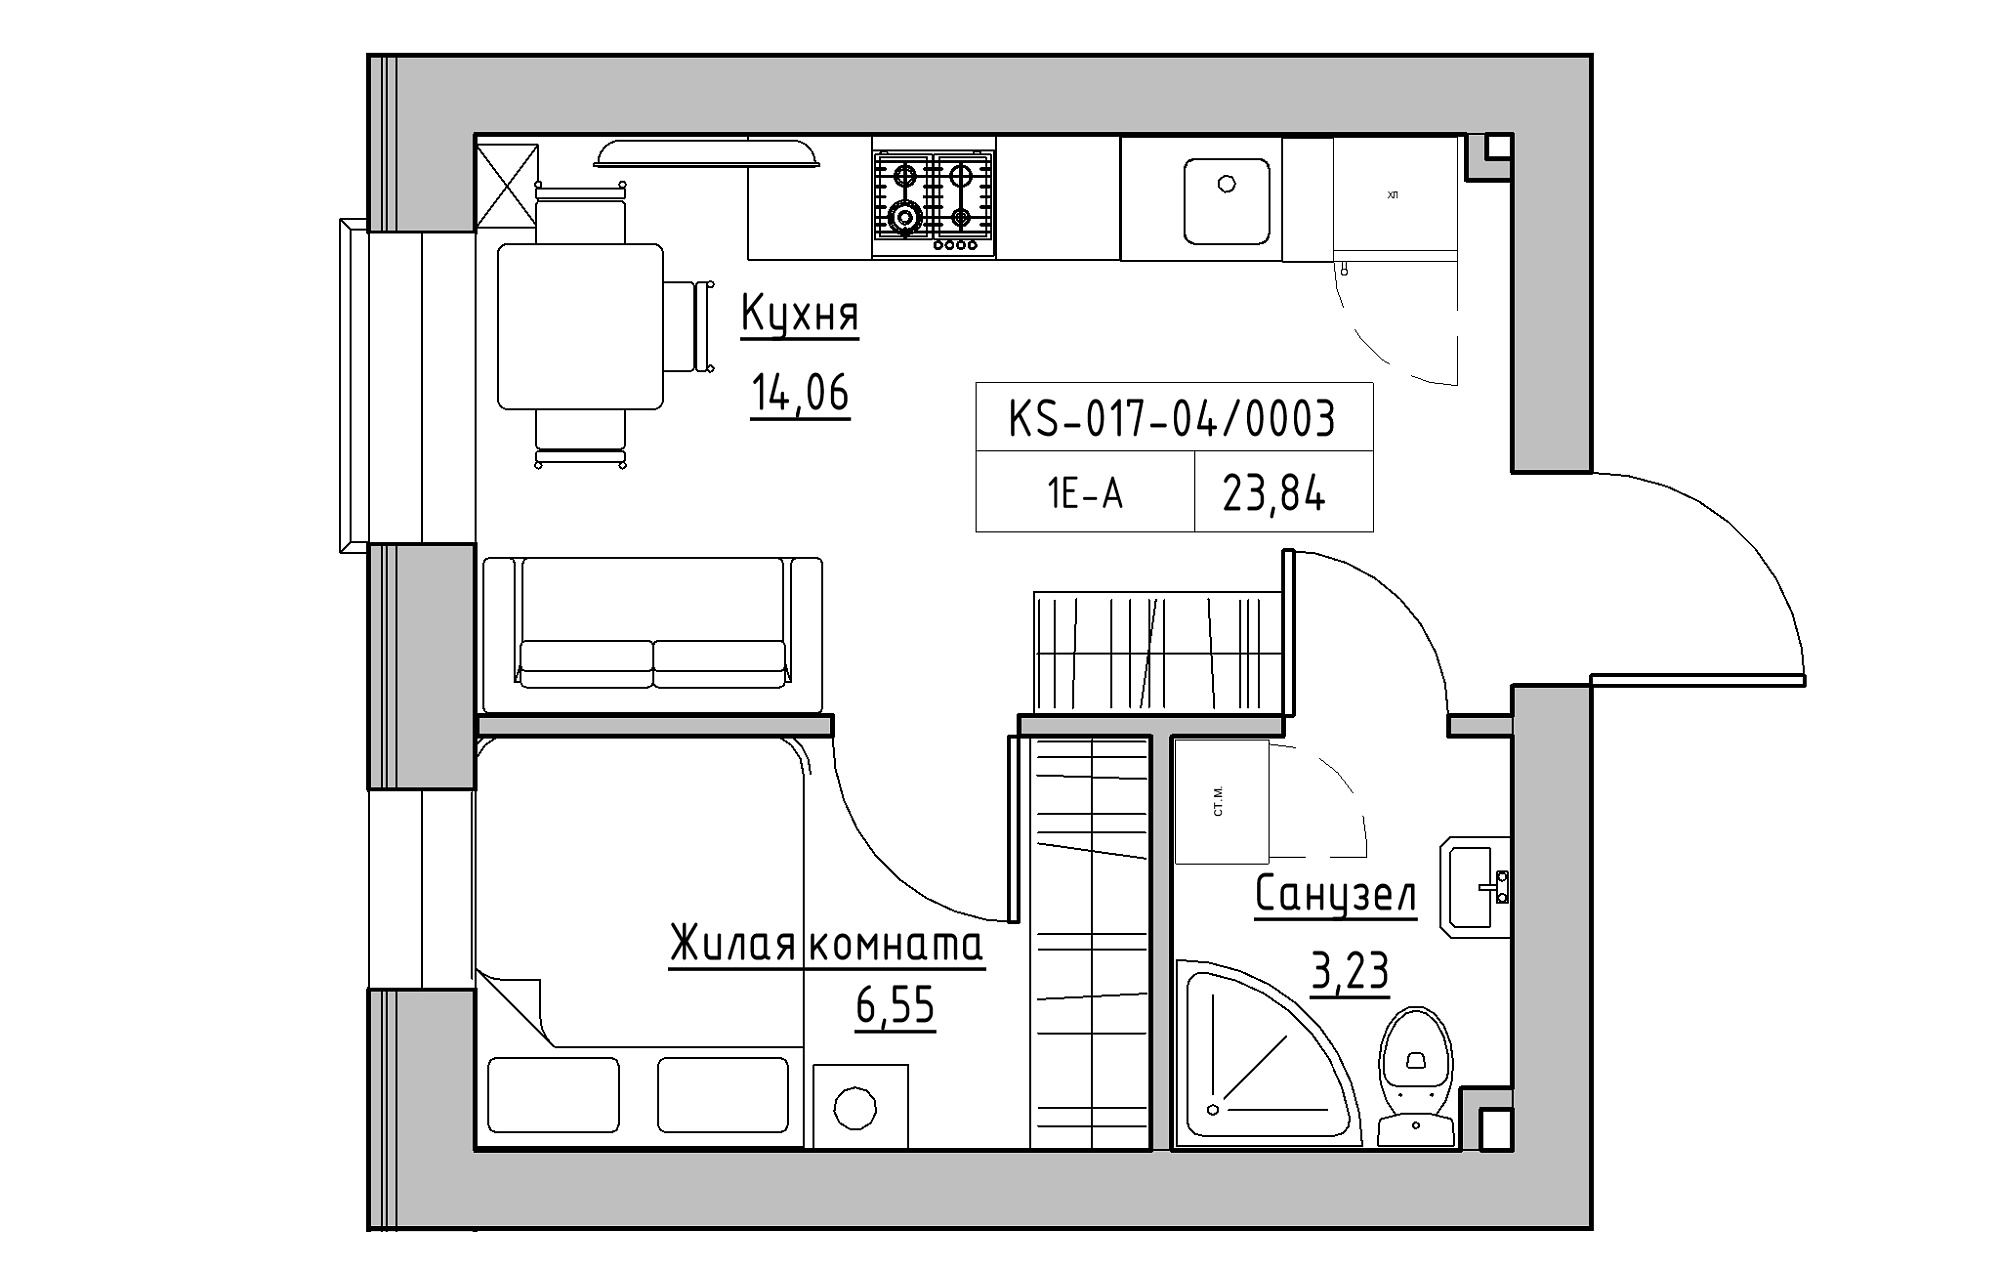 Planning 1-rm flats area 23.84m2, KS-017-04/0003.